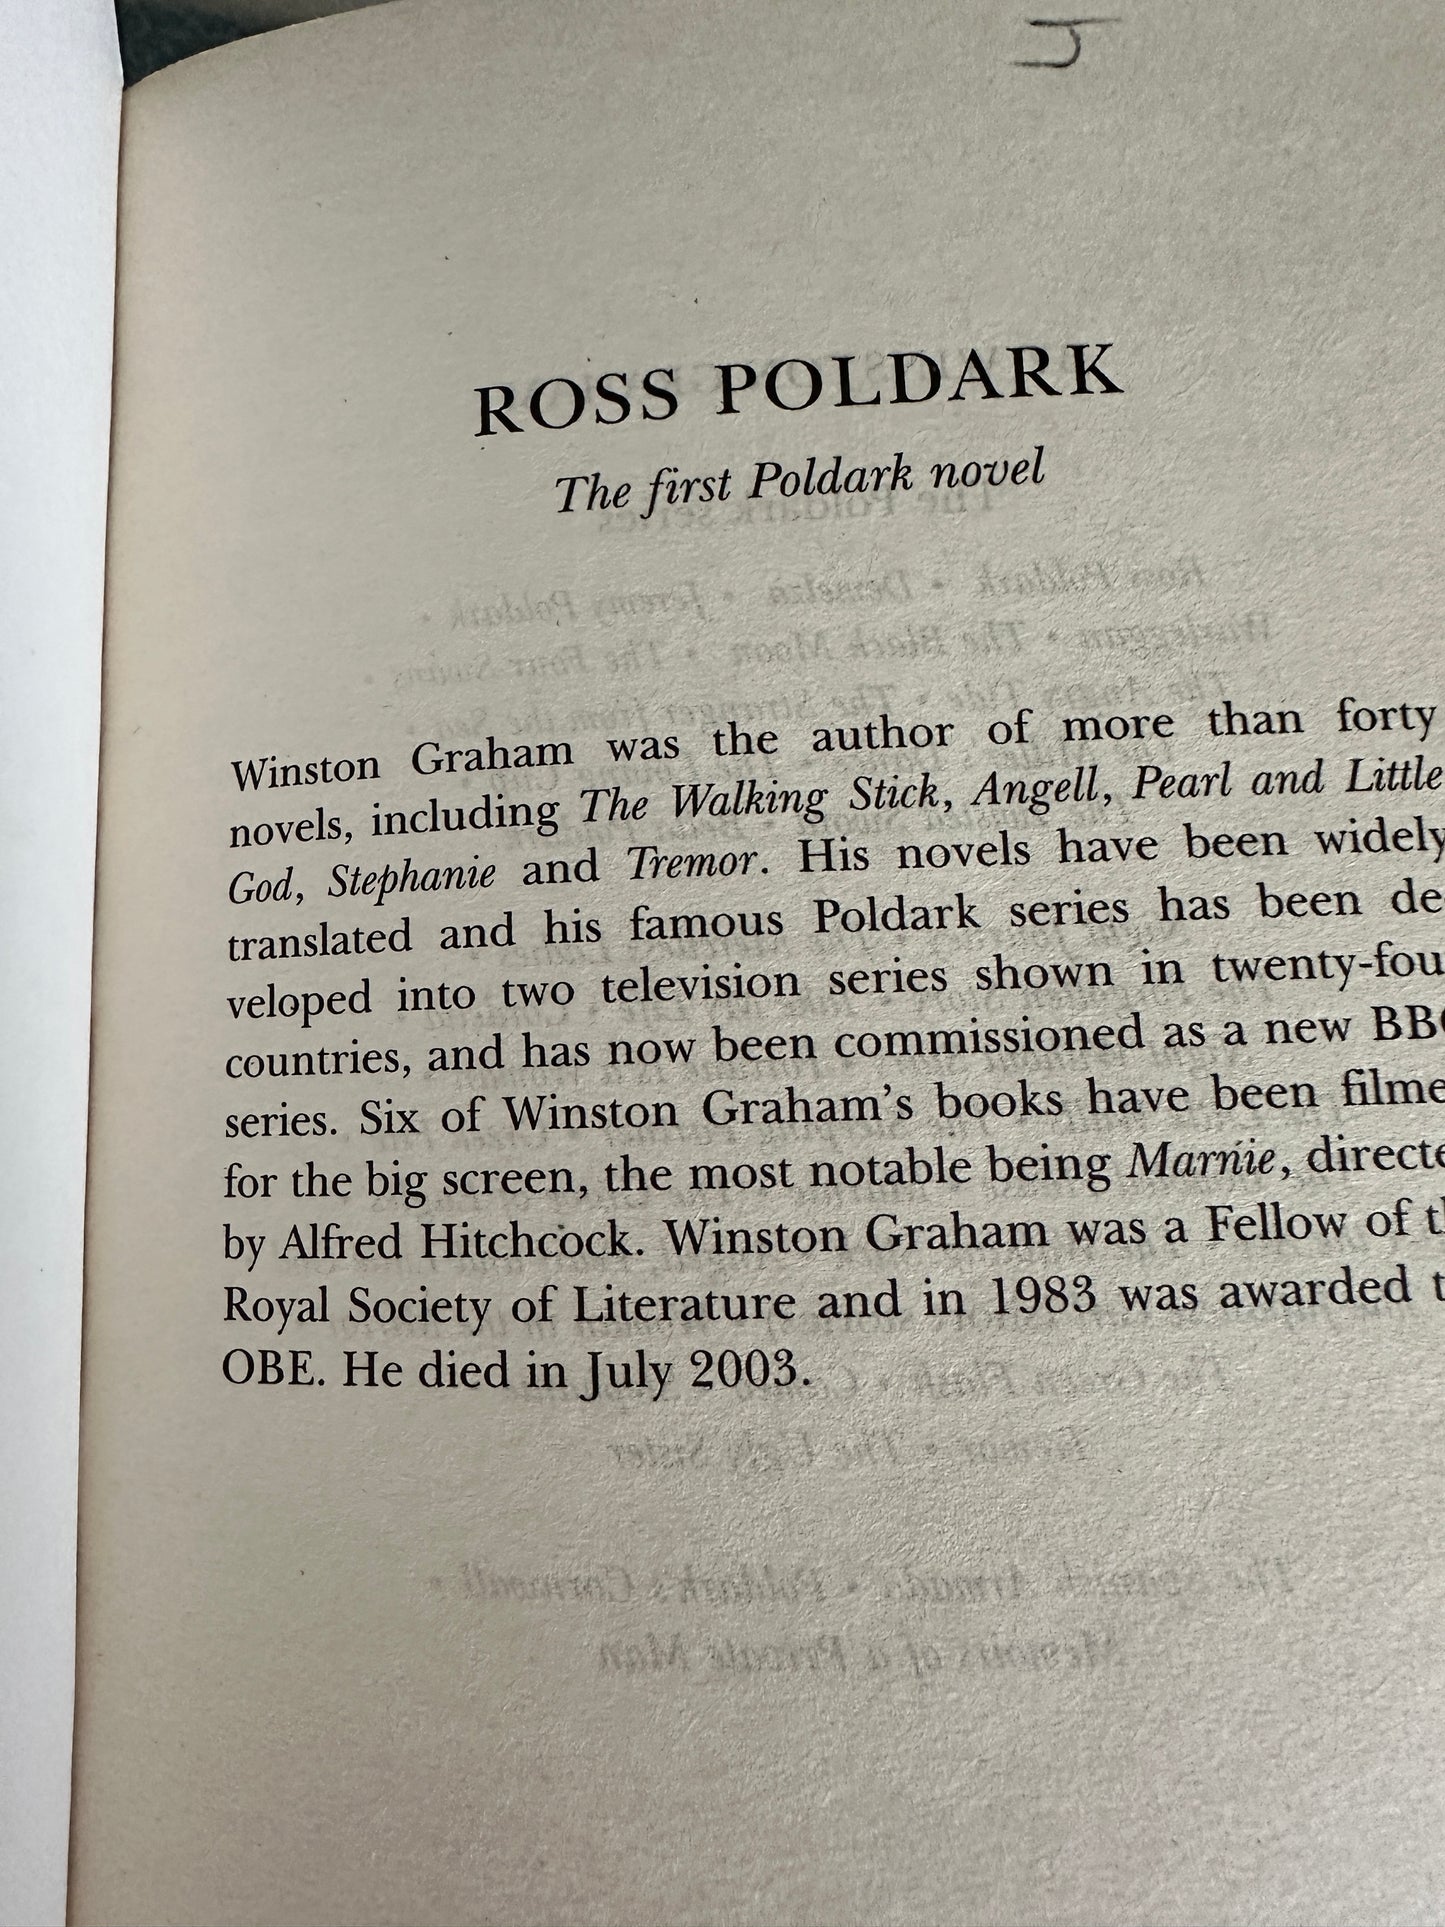 2015 Poldark: Ross Poldark - Winston Graham(Pan Books)